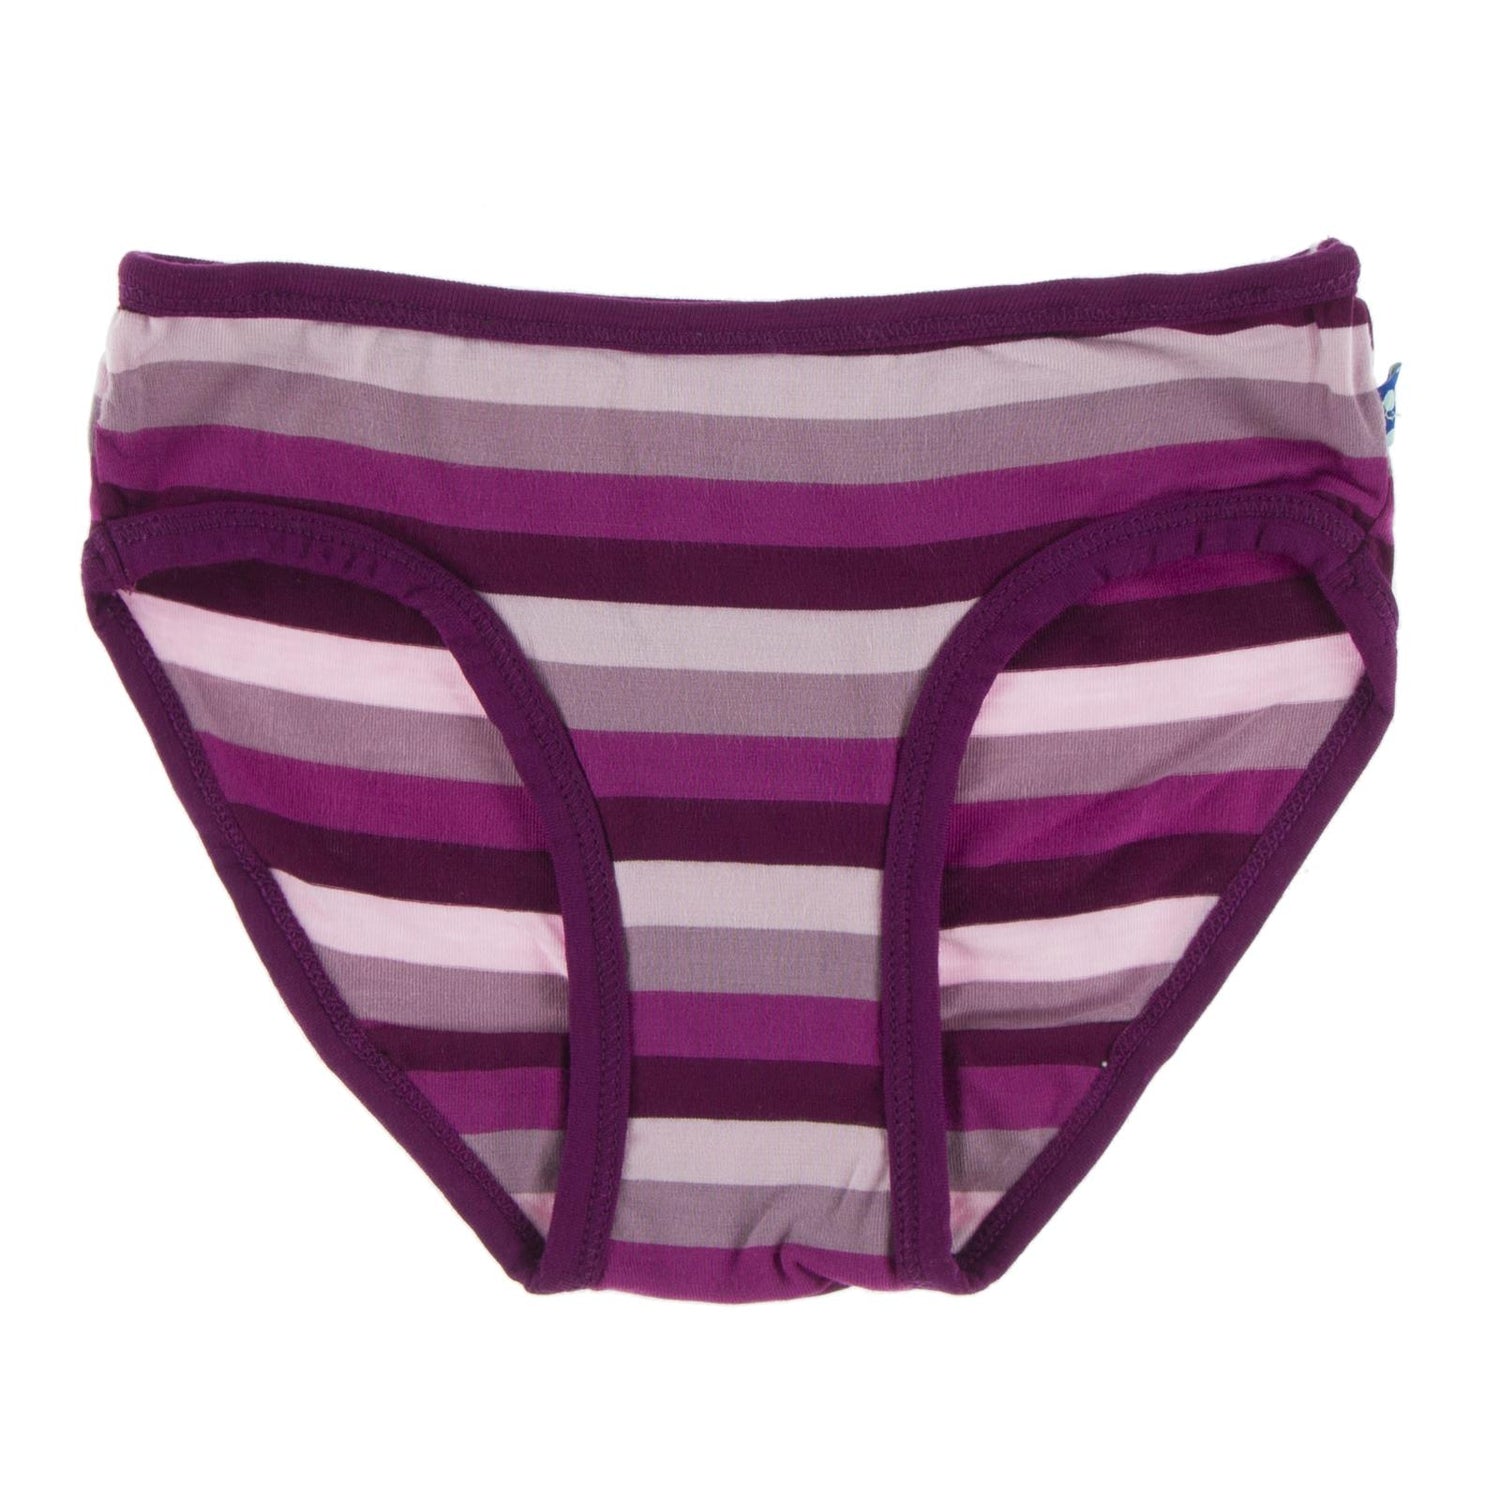 Print Underwear in Coral Stripe with Melody Trim